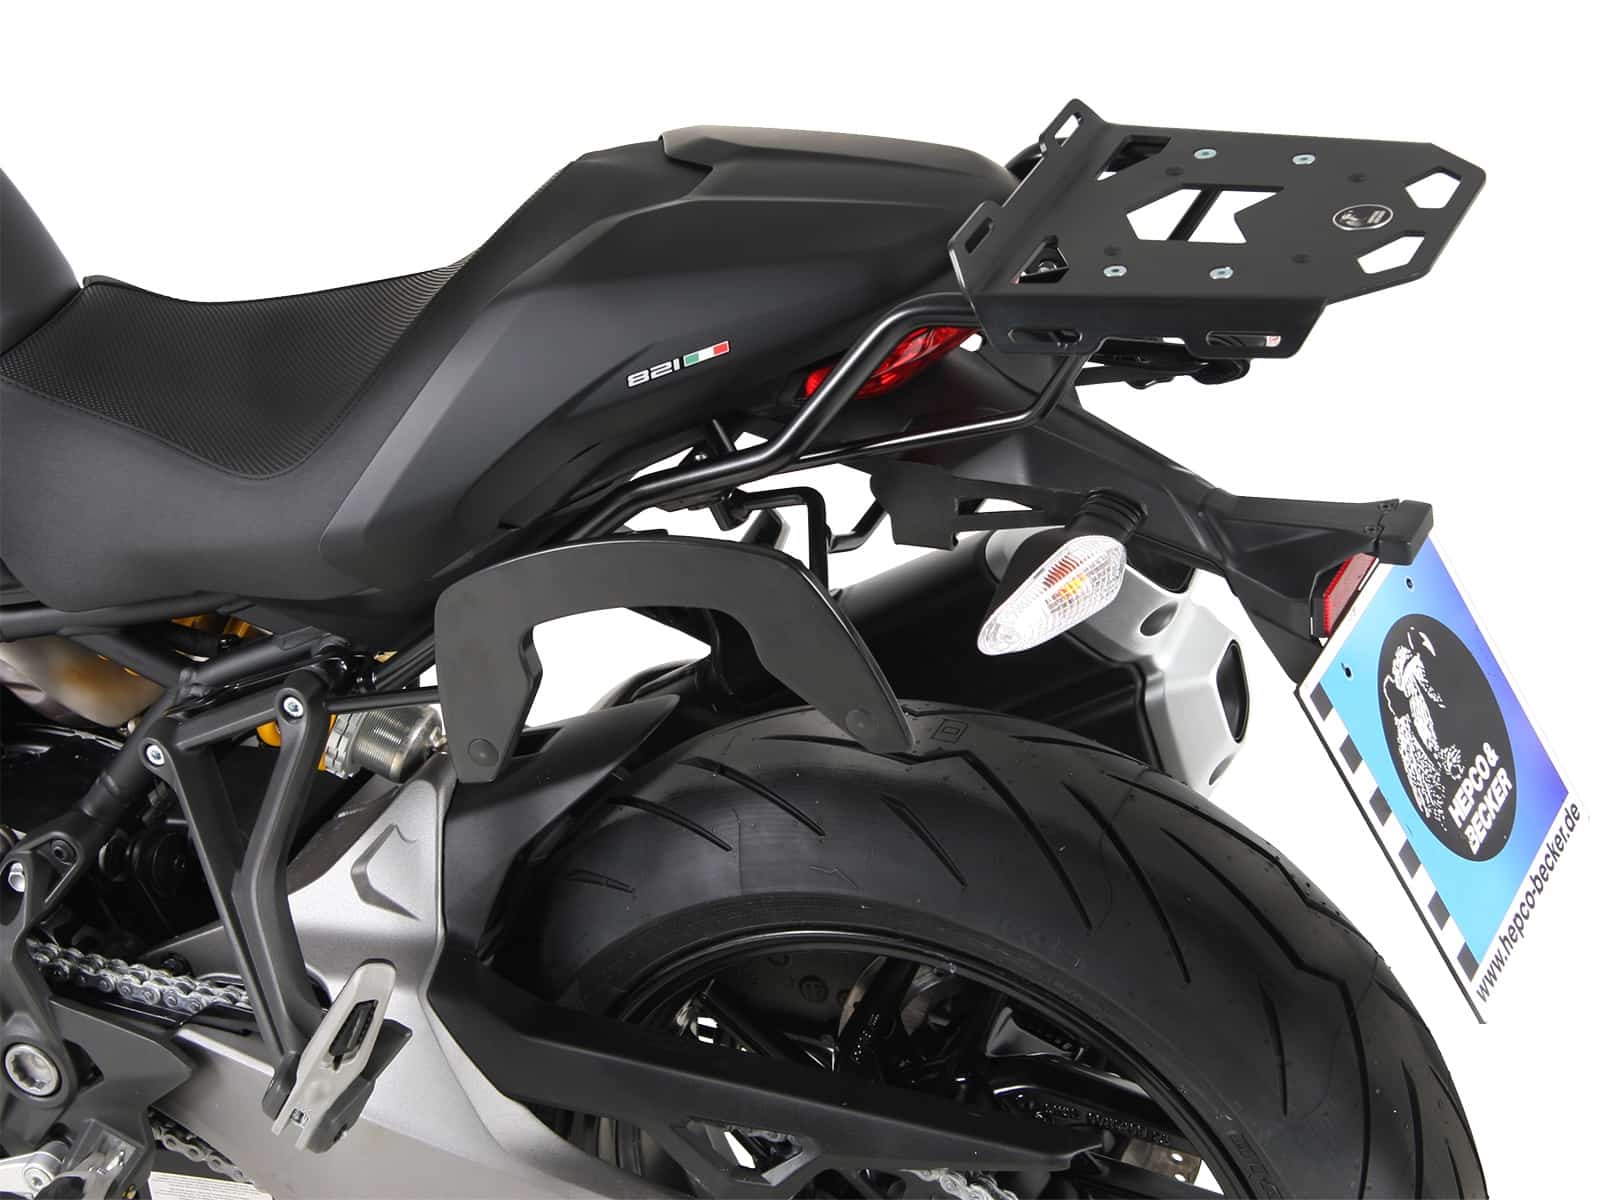 C-Bow sidecarrier for Ducati Monster 821 (2018-2020)